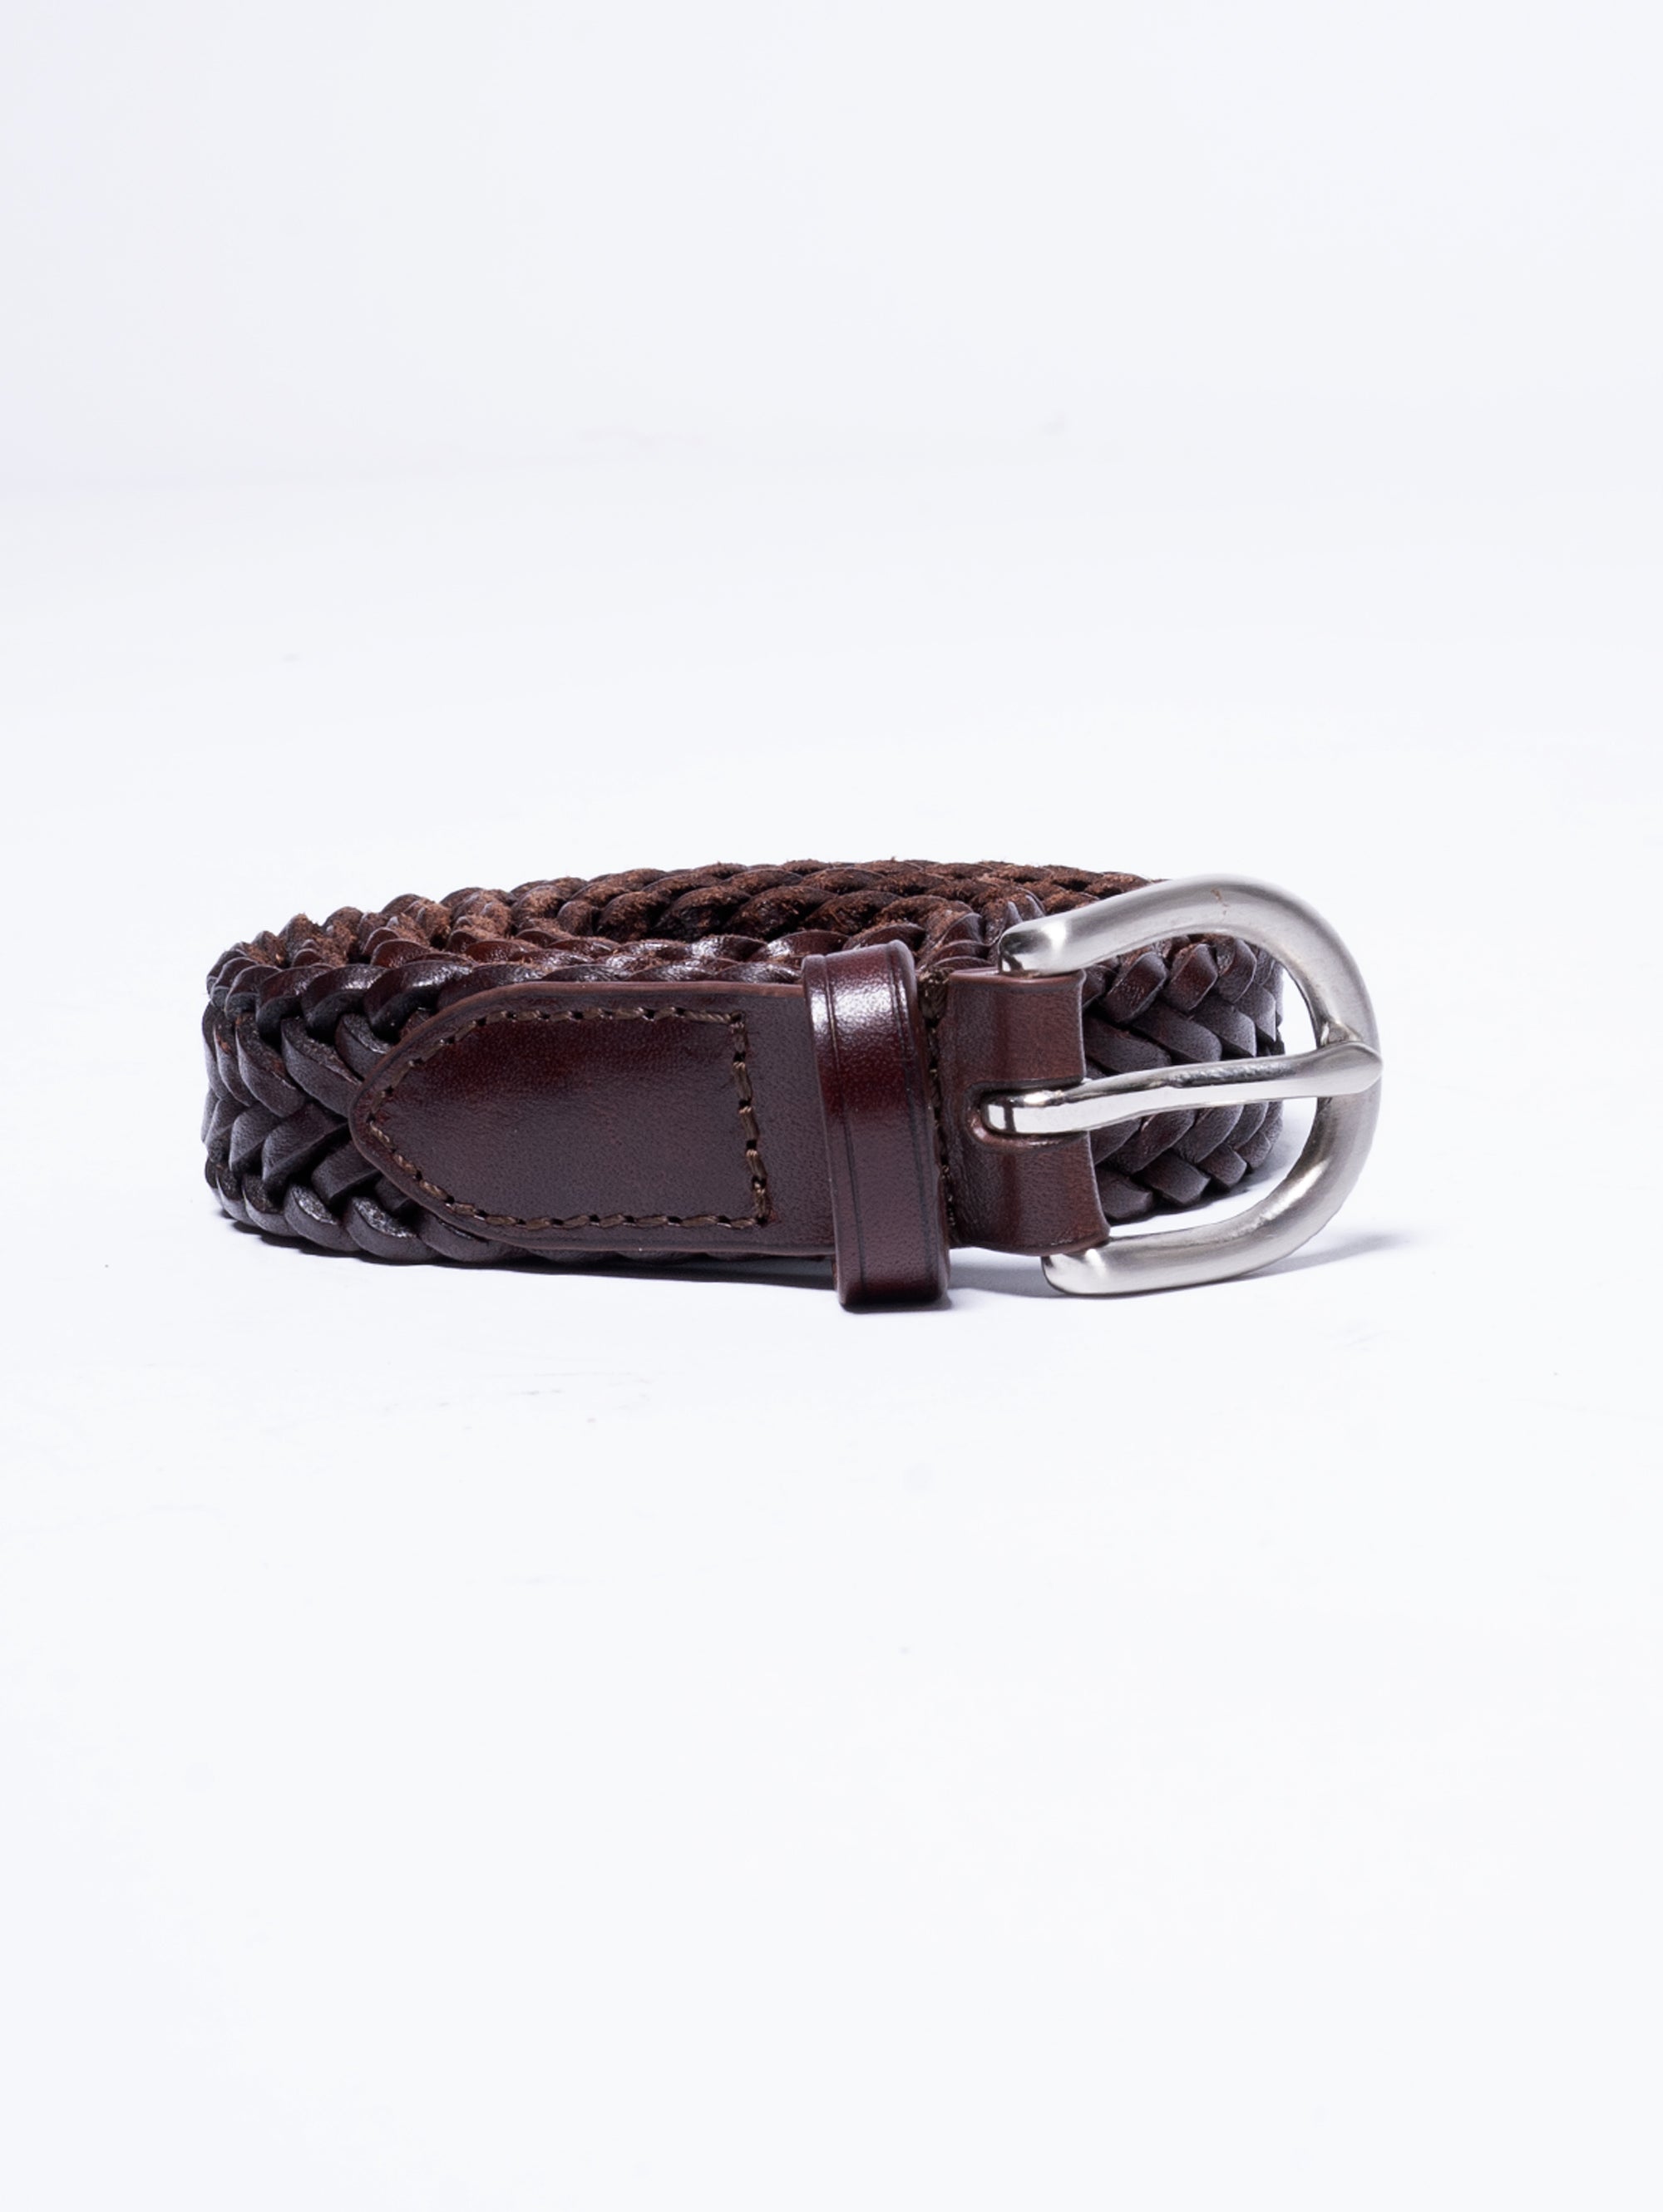 DRAGON DIFFUSION-Cintura Sottile in Pelle Marrone-TRYME Shop